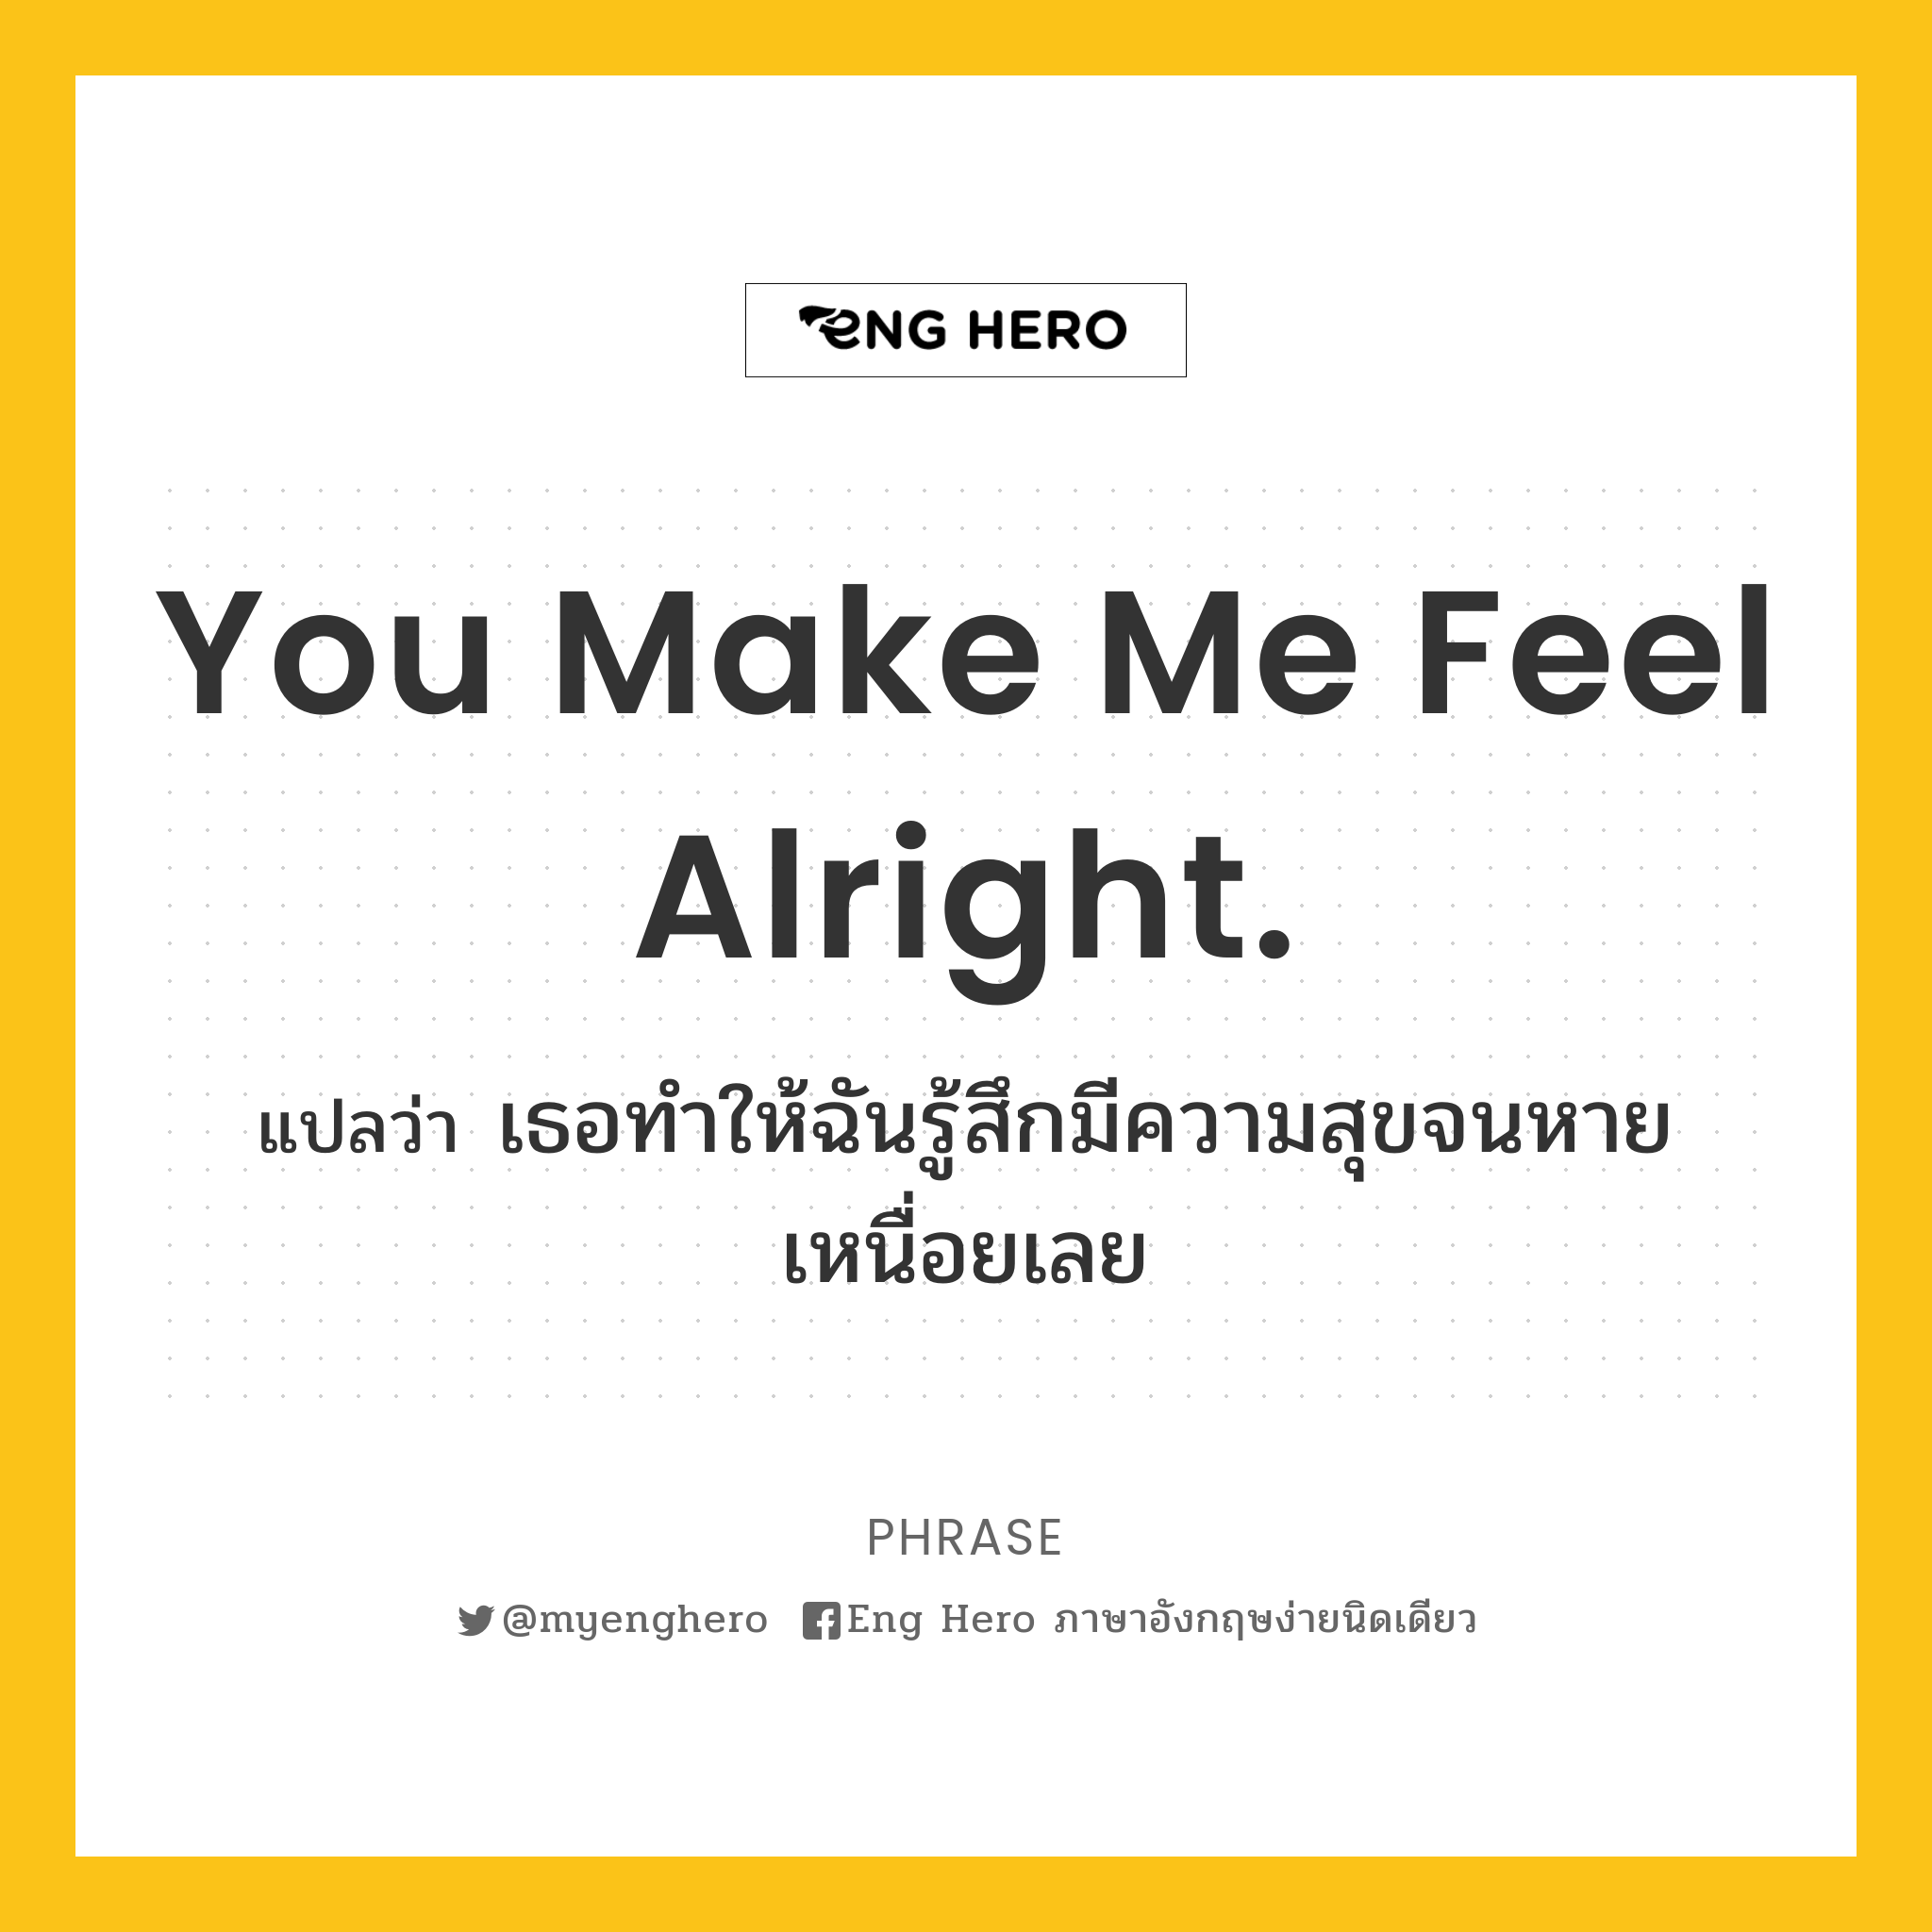 You make me feel alright.